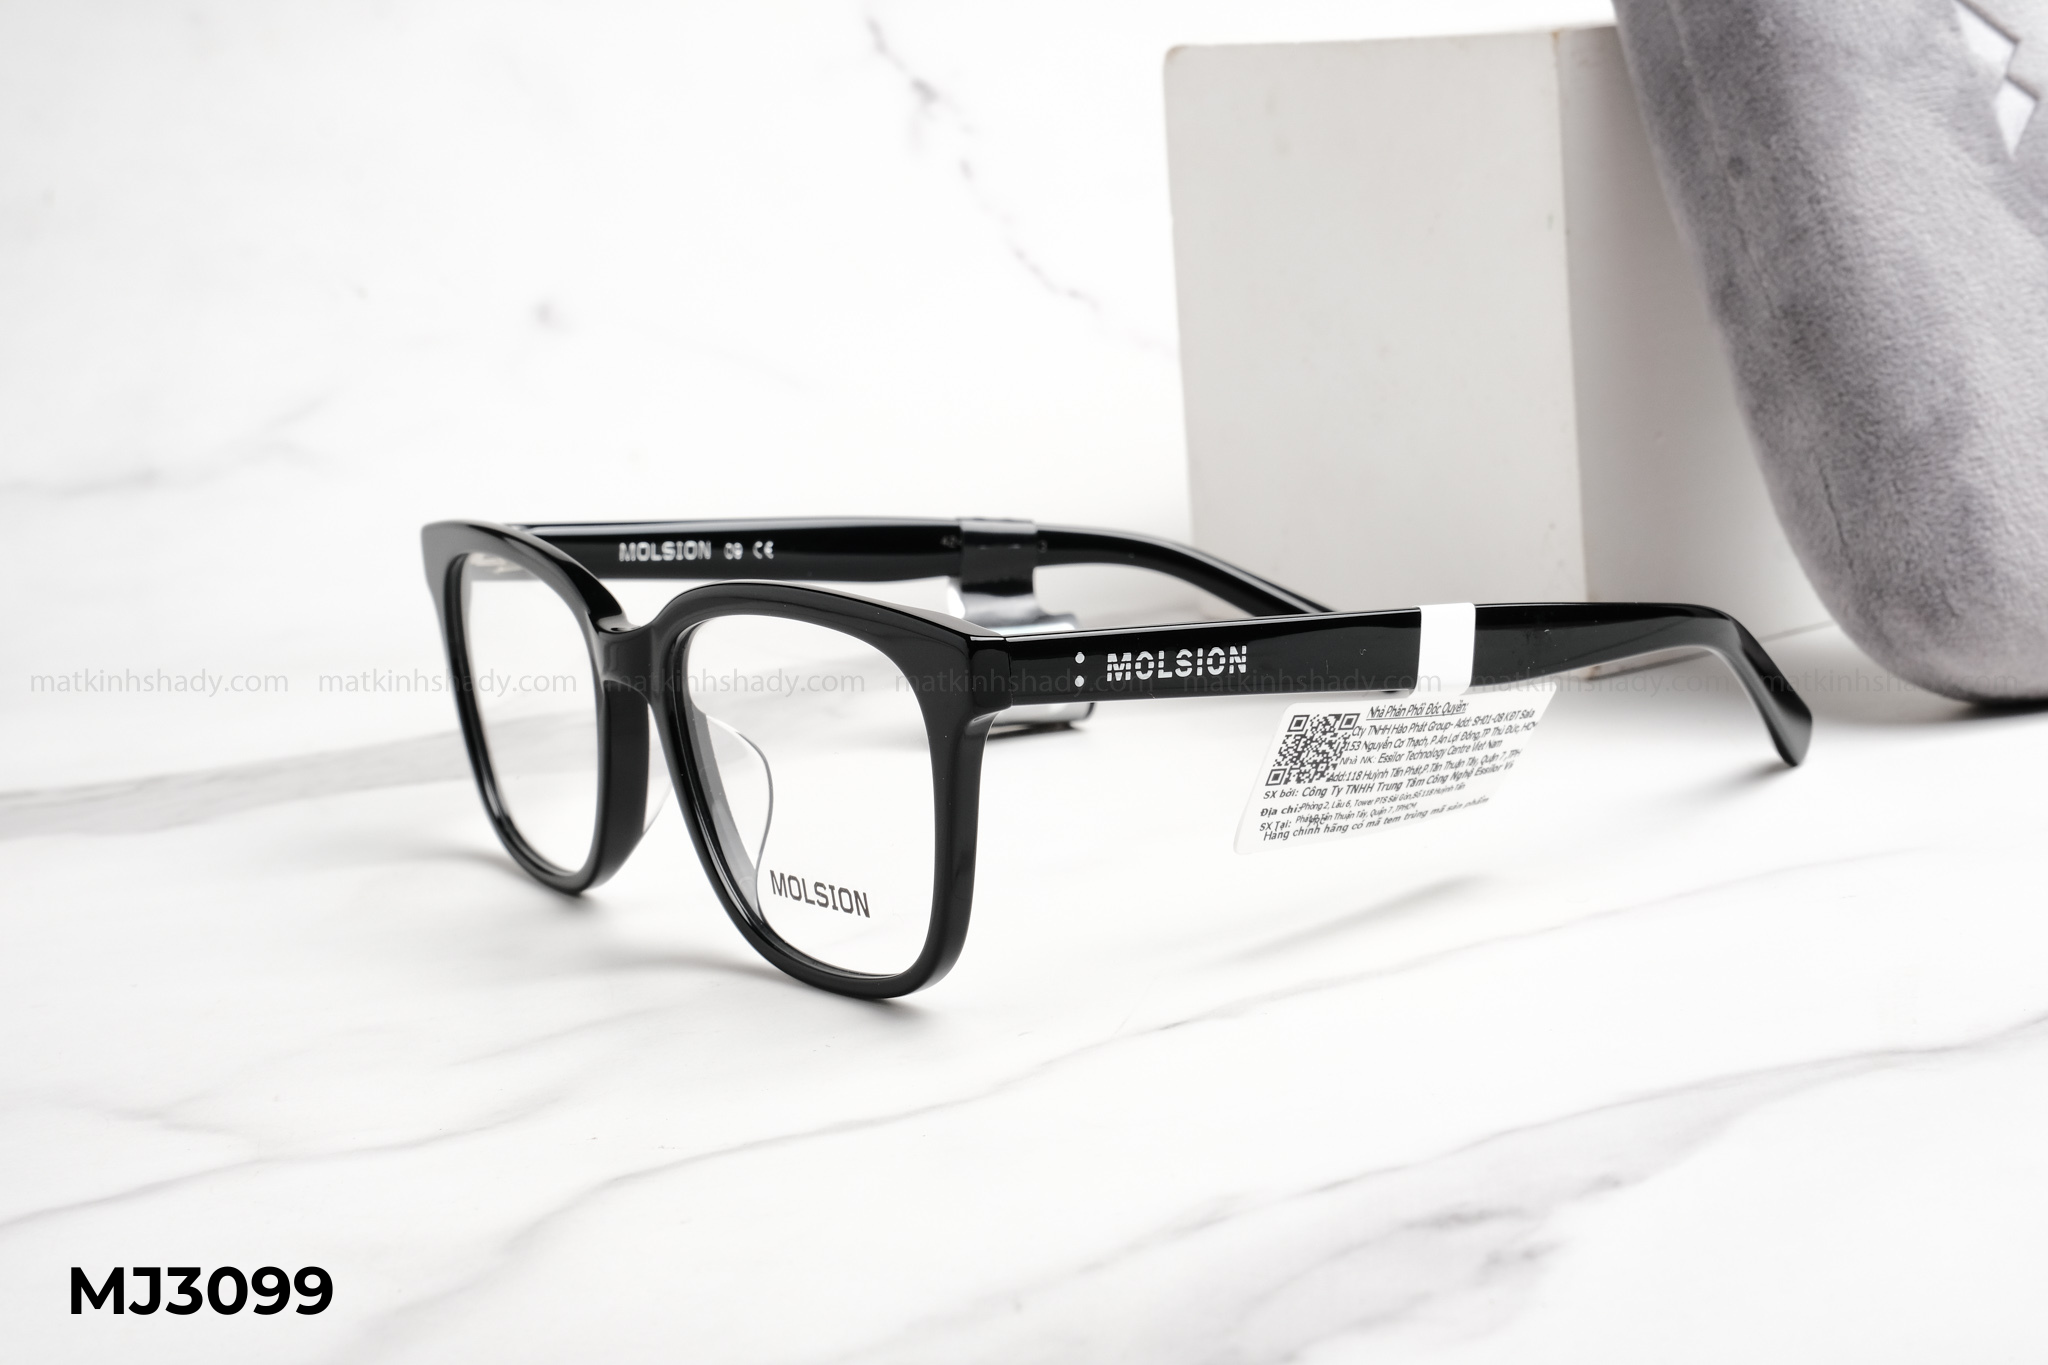  Molsion Eyewear - Glasses - MJ3099 